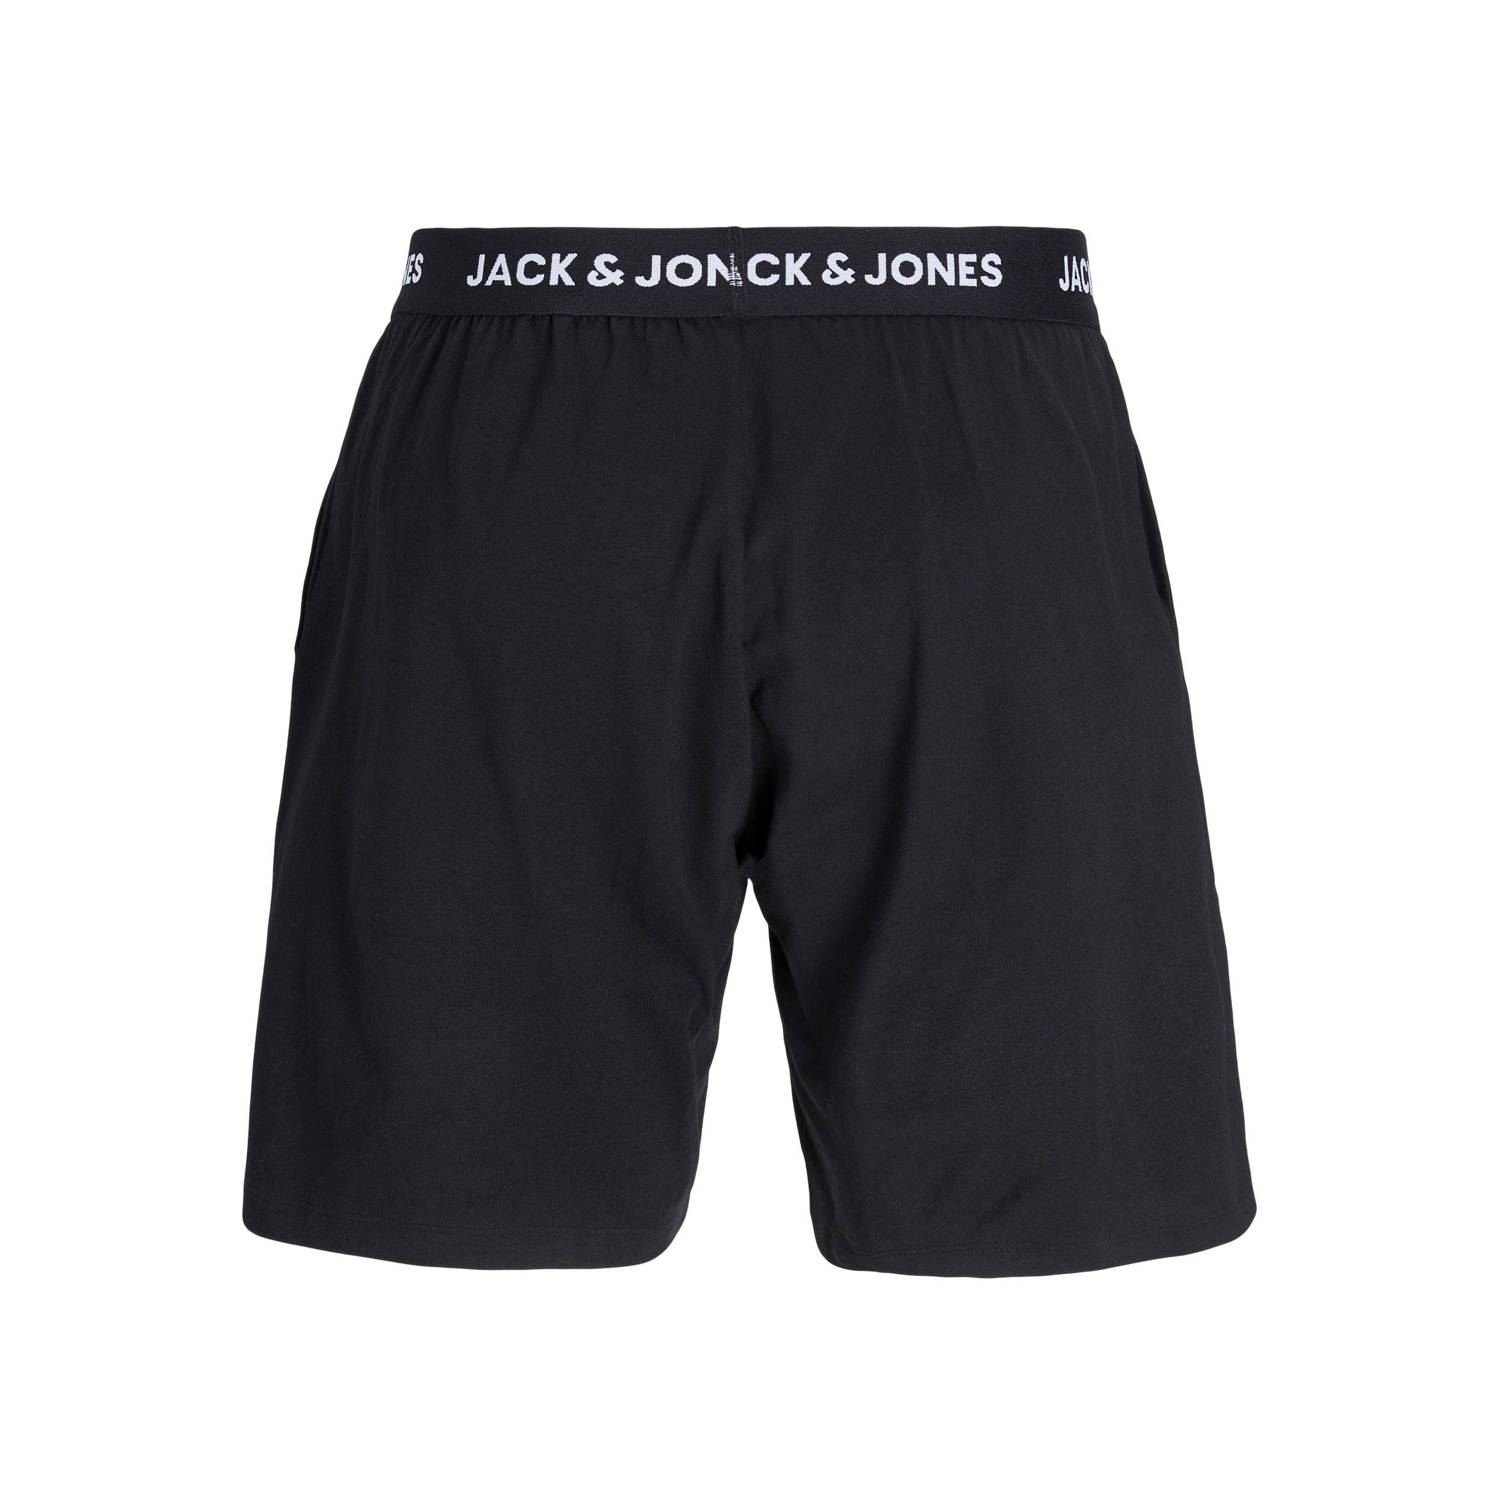 JACK & JONES pyjamashort JACFRED zwart